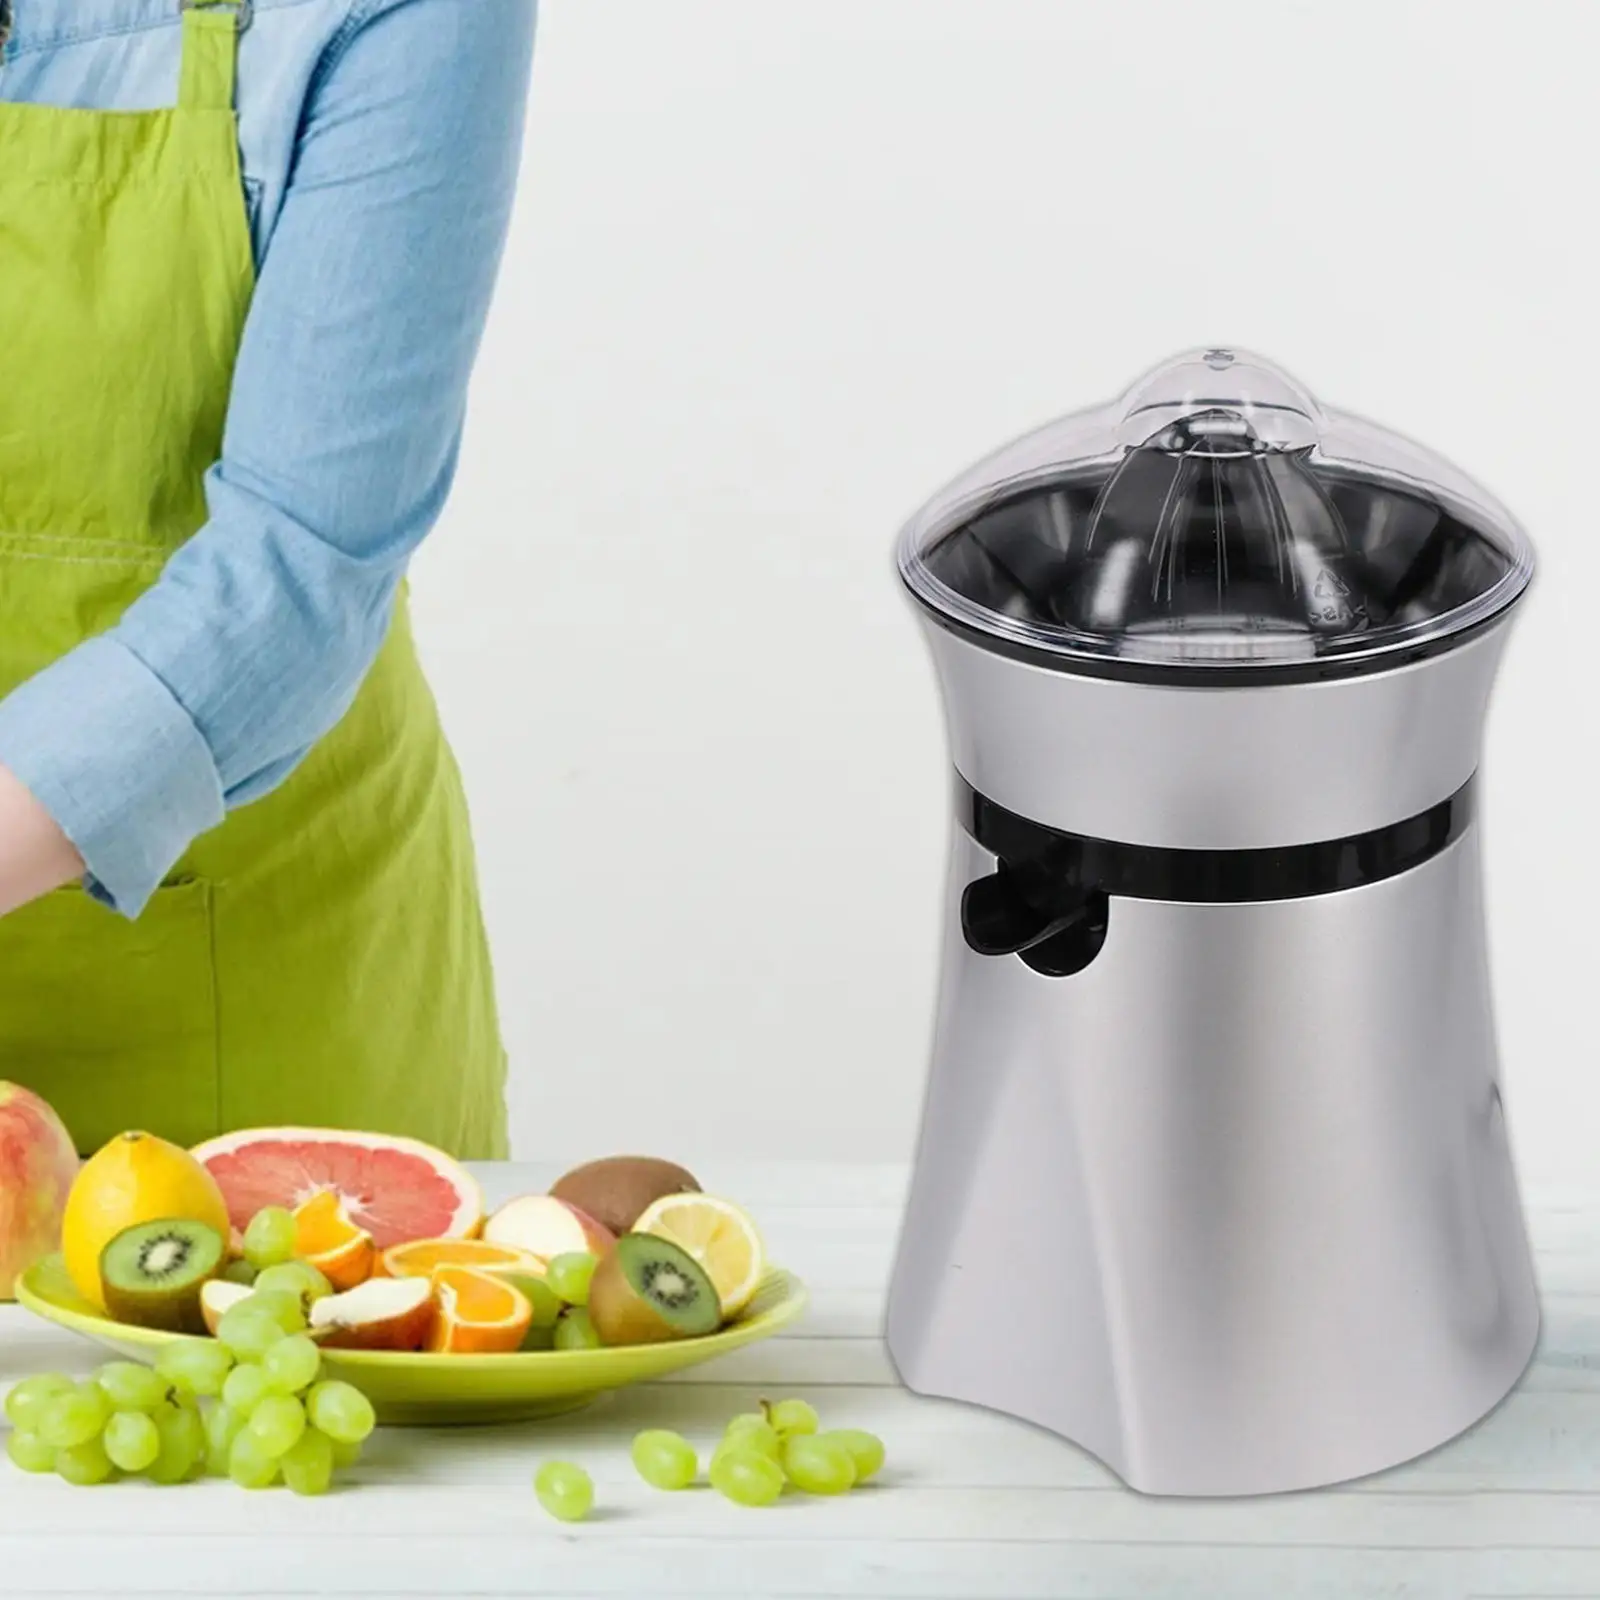 Household Electric Juicer Anti-Drip Spout 400ml Fruit Squeezer Fruit Juicer Orange Juicer Machine for Home Kitchen Appliances